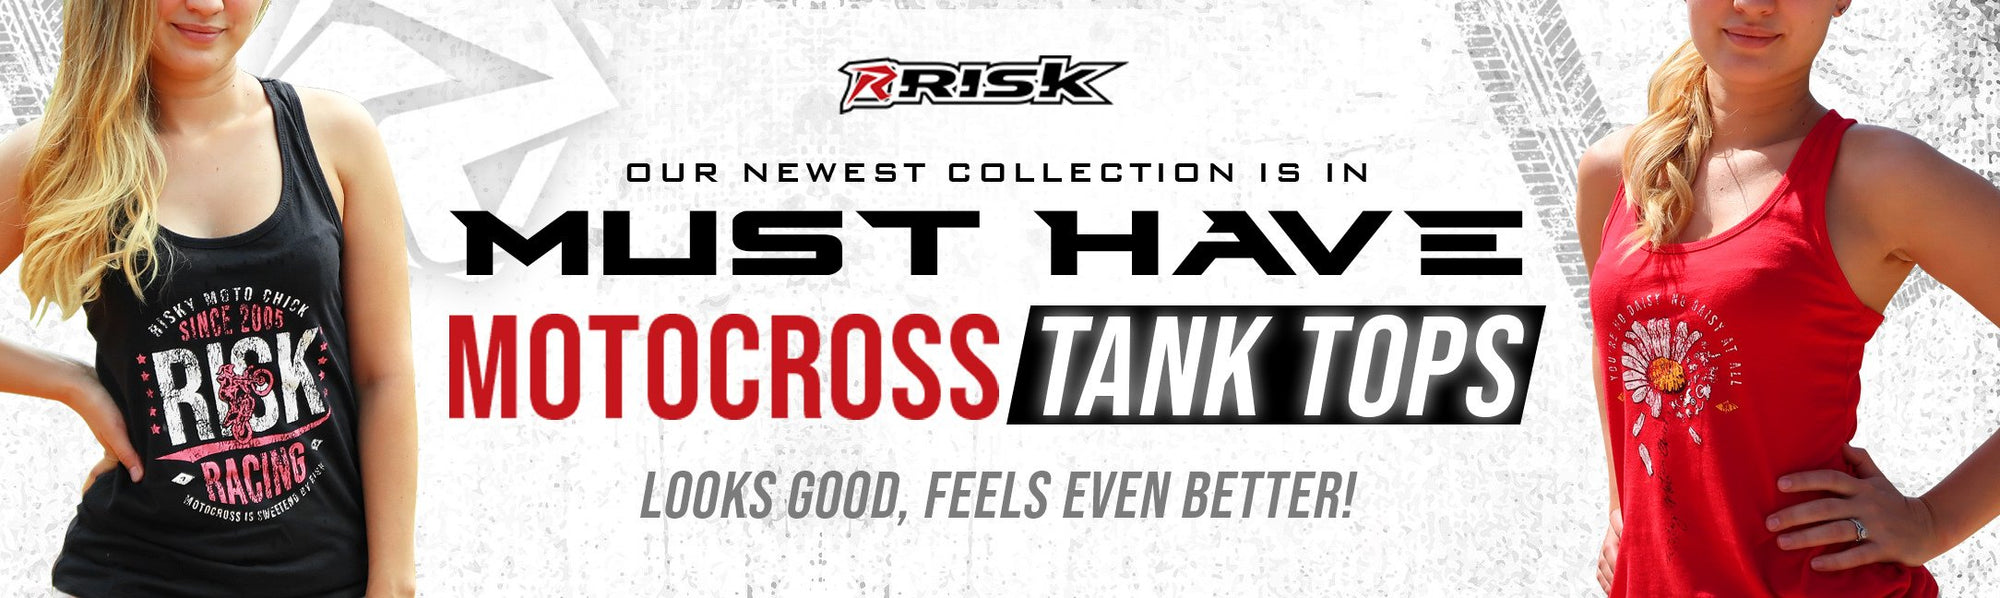 Motocross inspired women's tank tops by Risk Racing